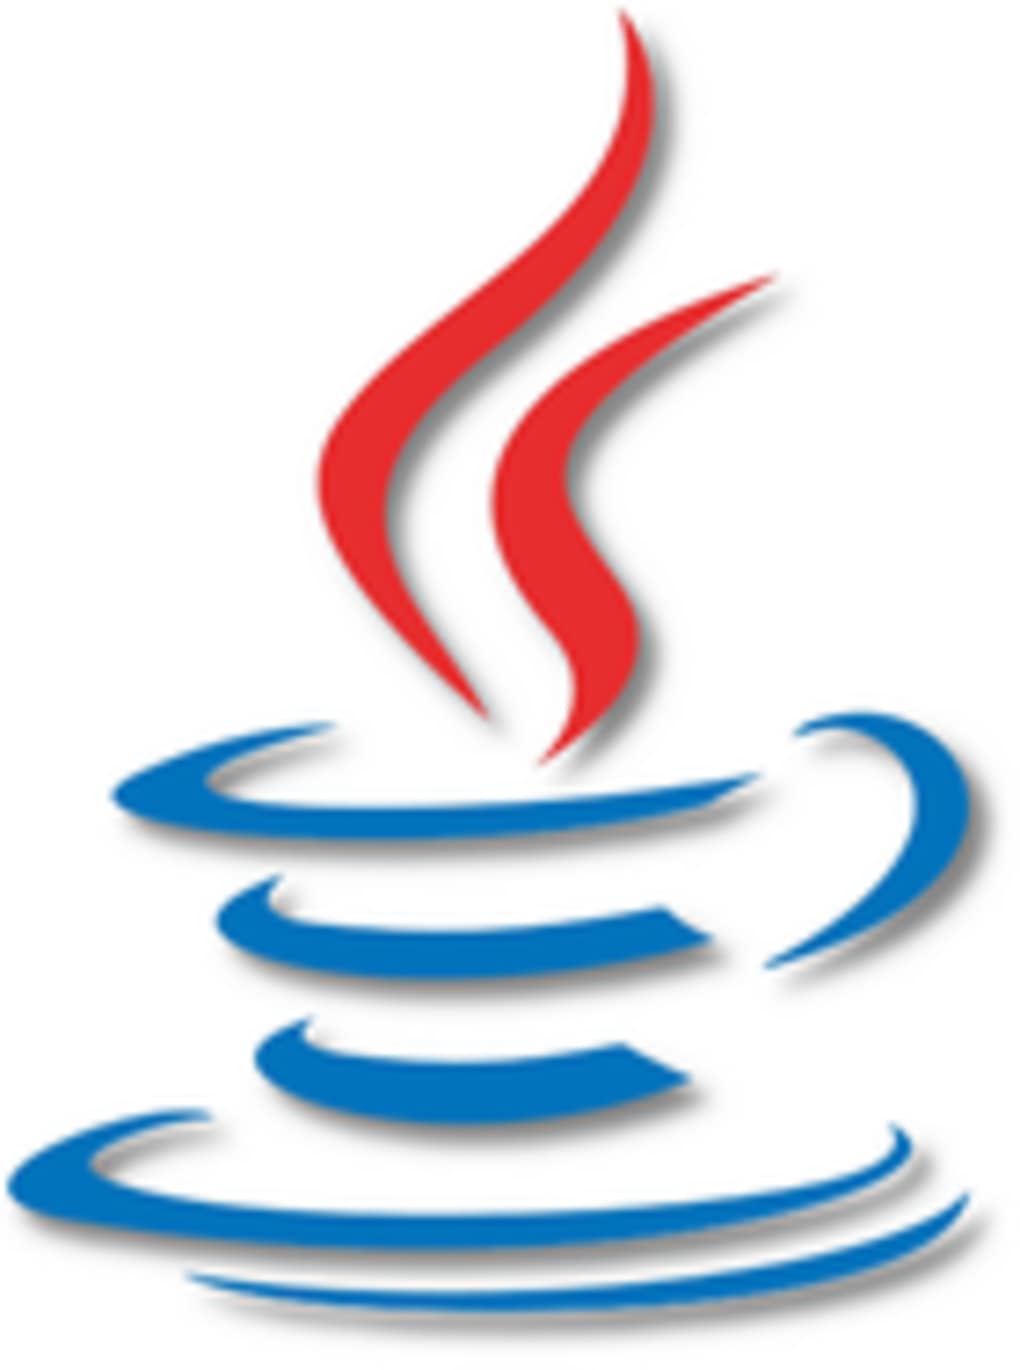 Java Jre 1.7 Download For Mac